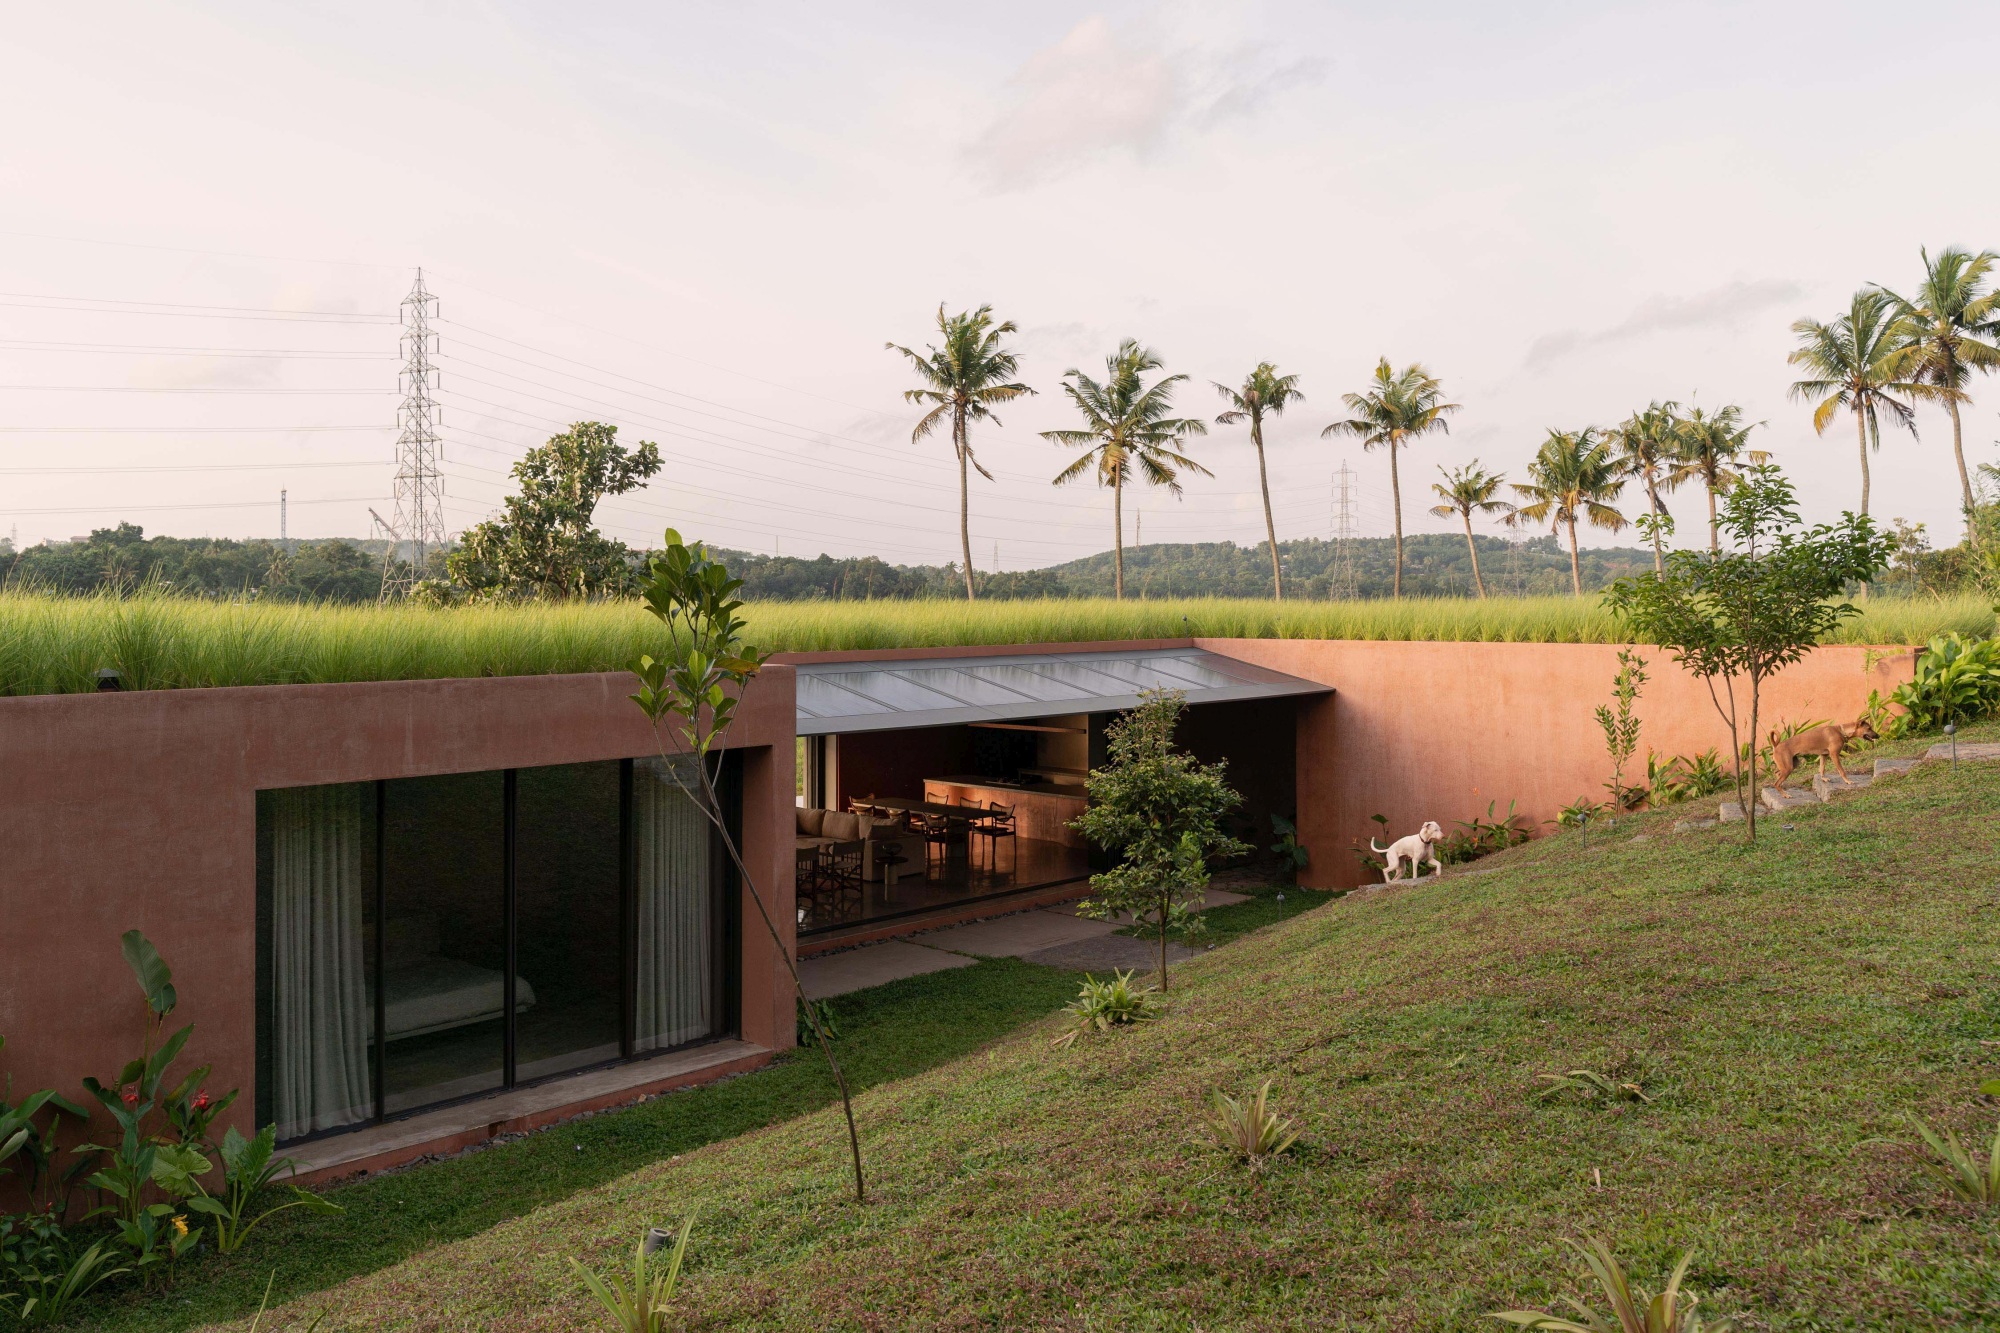 Alarine Earth Home, by Zarine Jamshedji Architects